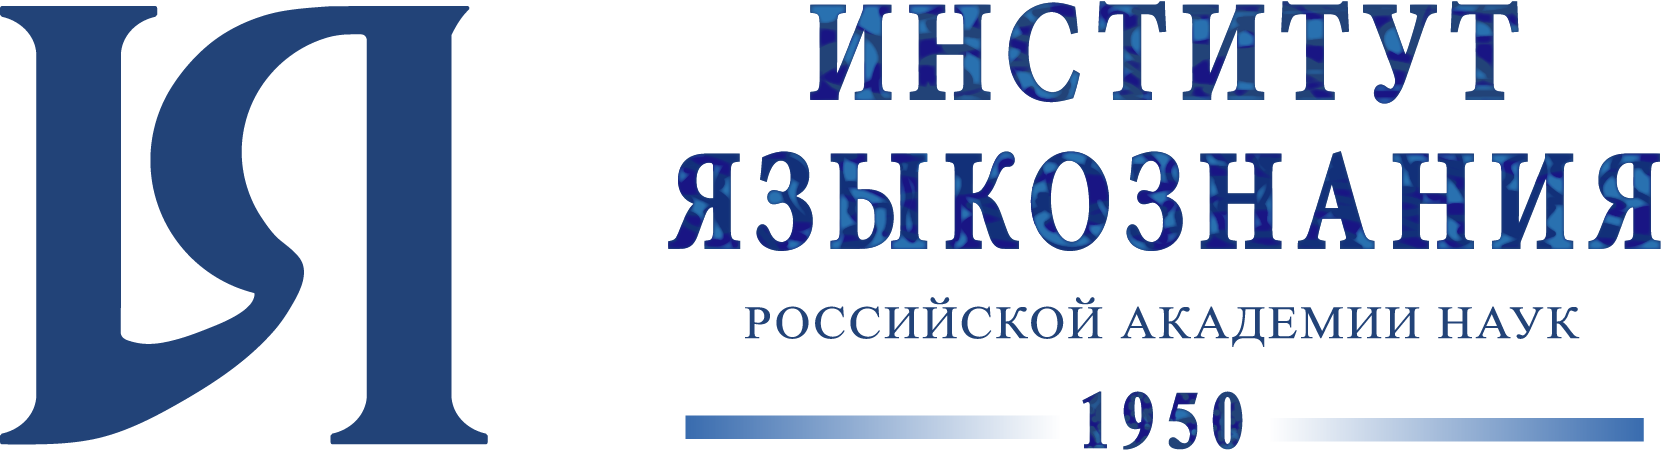 Mobile logo Russian